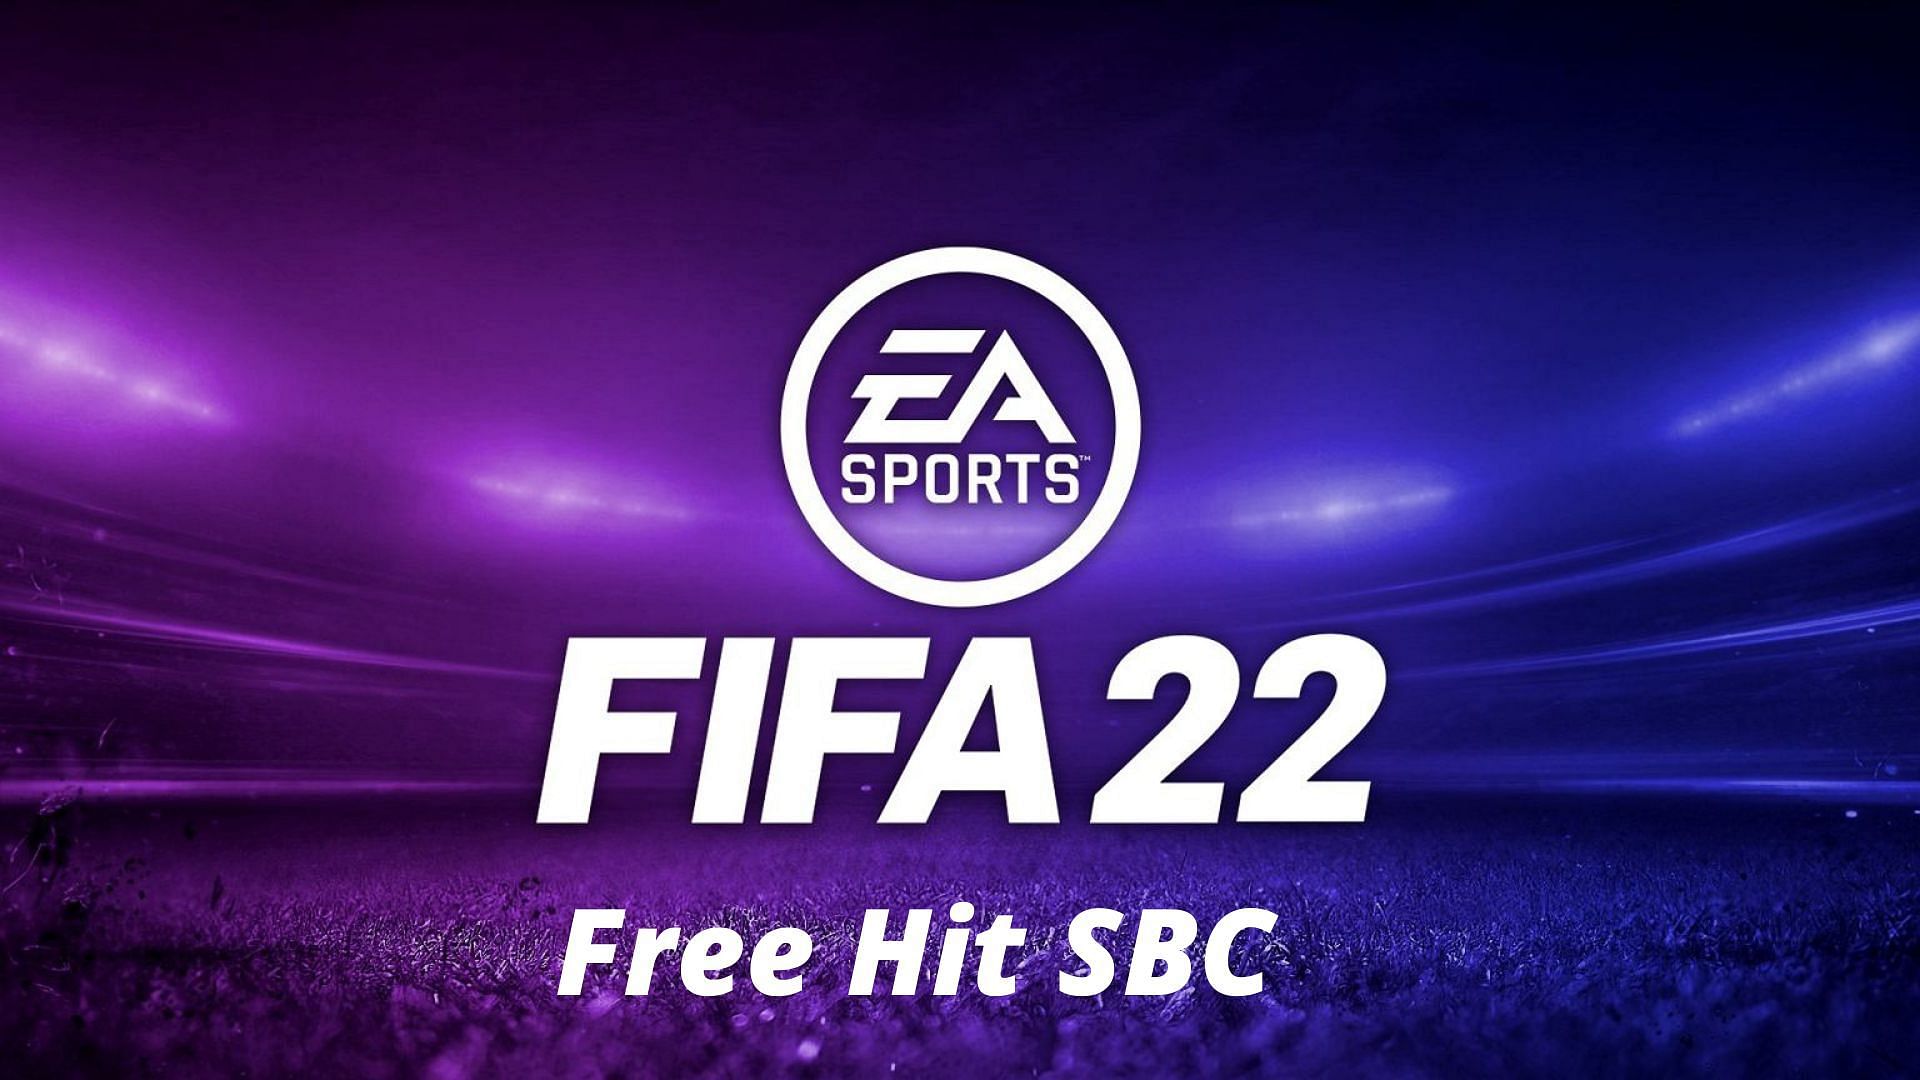 Free Hit SBC is live in FIFA 22 Ultimate Team (Image via Sportskeeda)